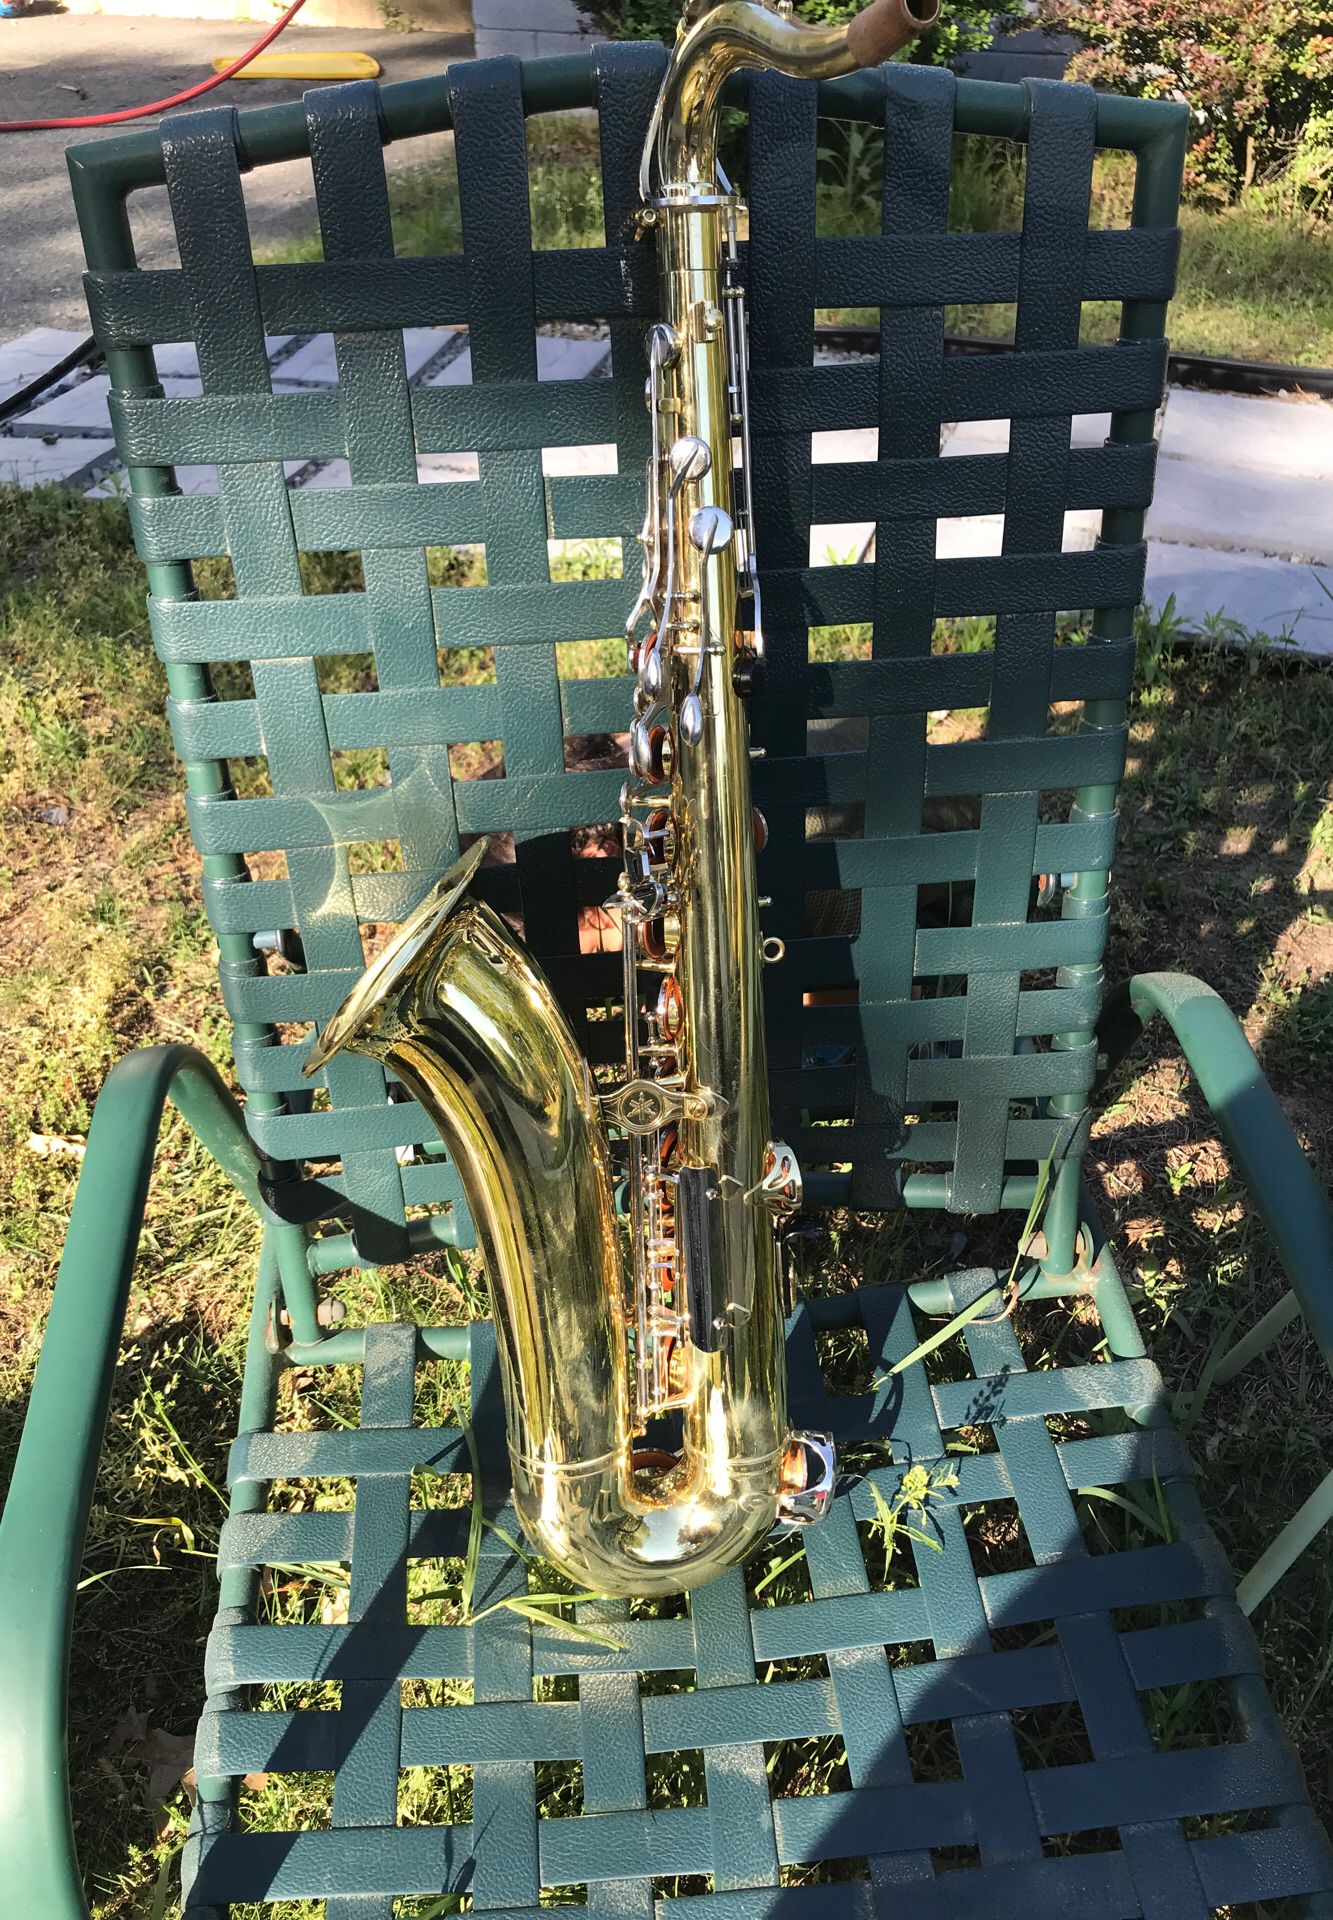 Yts-23 tenor saxophone